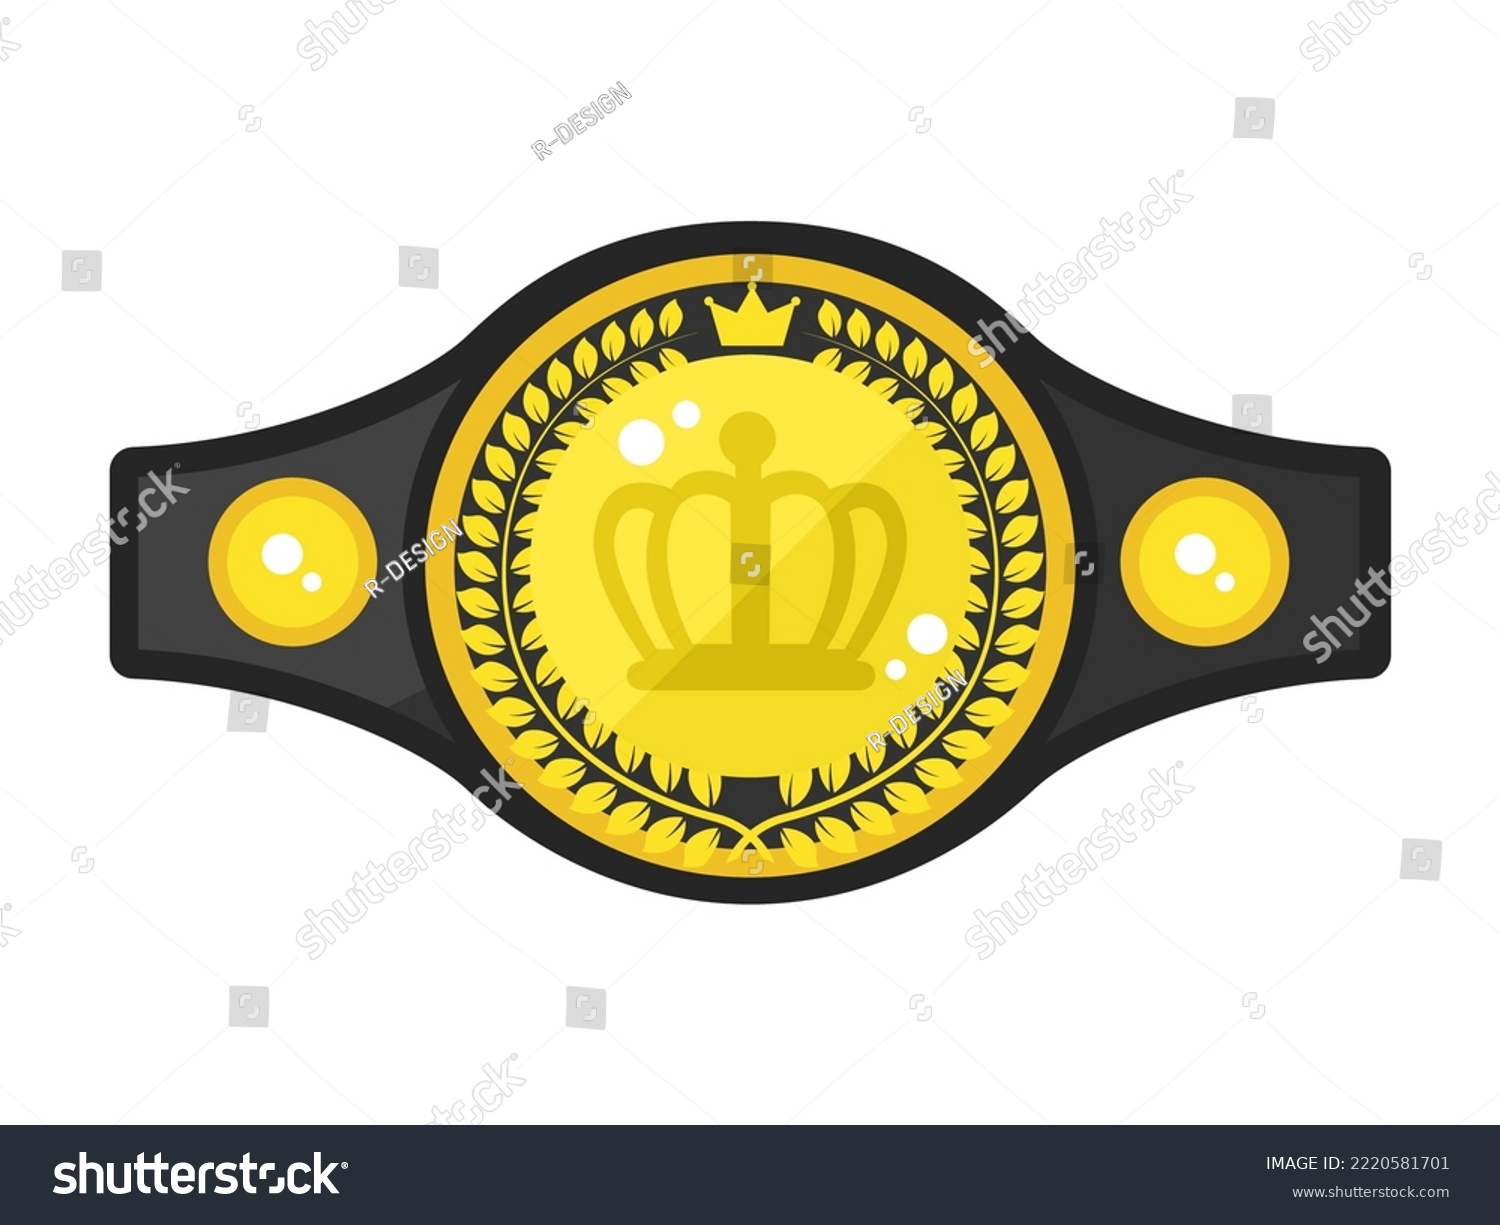 SVG of An illustration of a black championship belt with a crown mark. svg